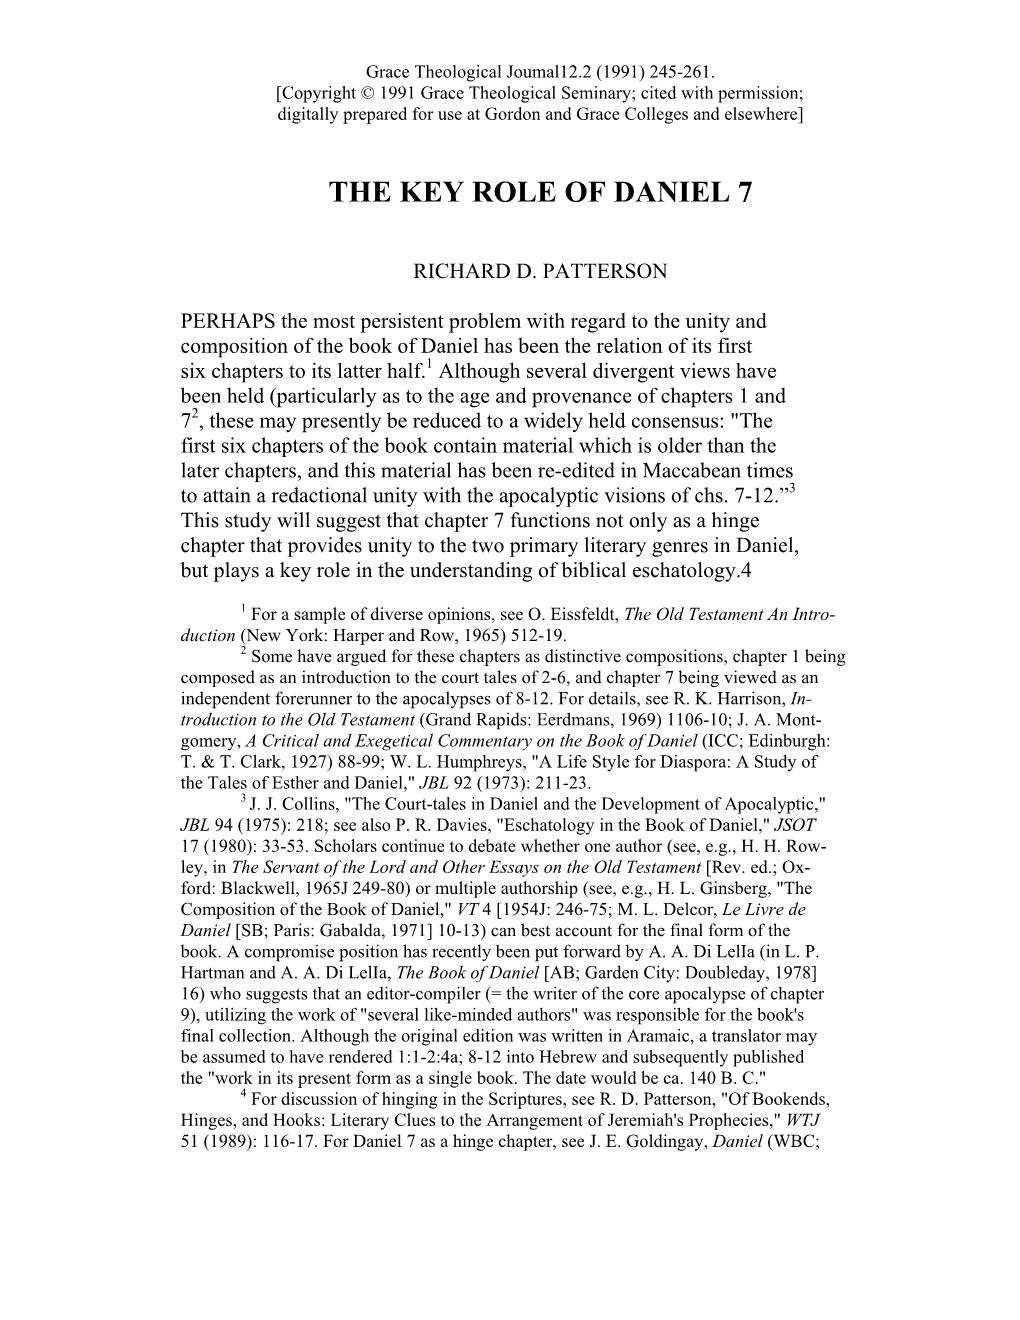 The Key Role of Daniel 7